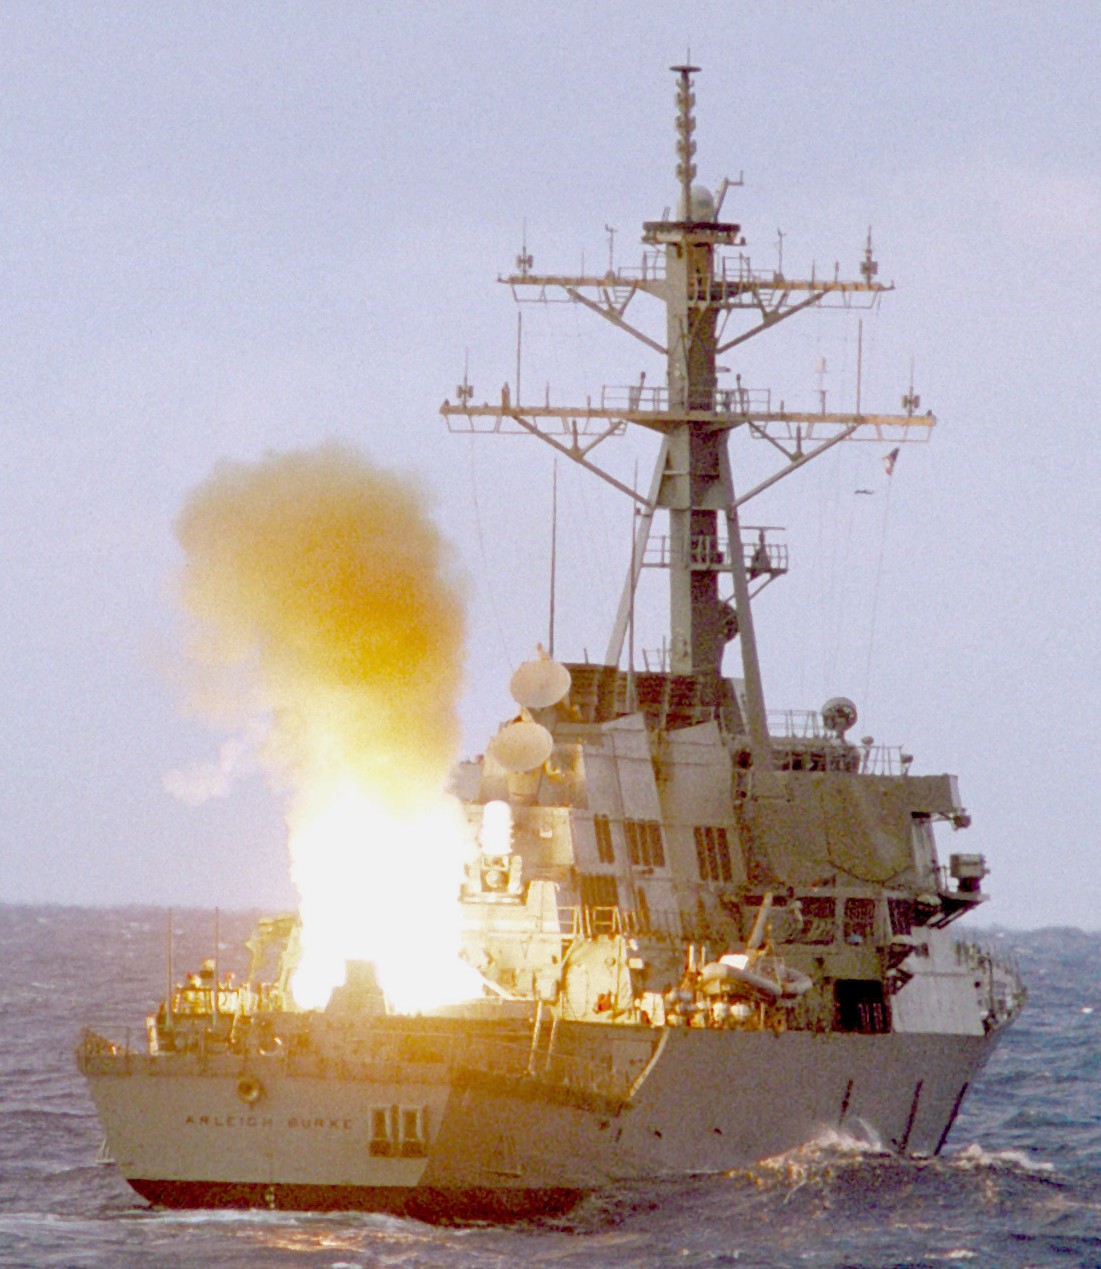 ddg-51 uss arleigh burke destroyer us navy 76 rim-66c standard missile sm-2mr